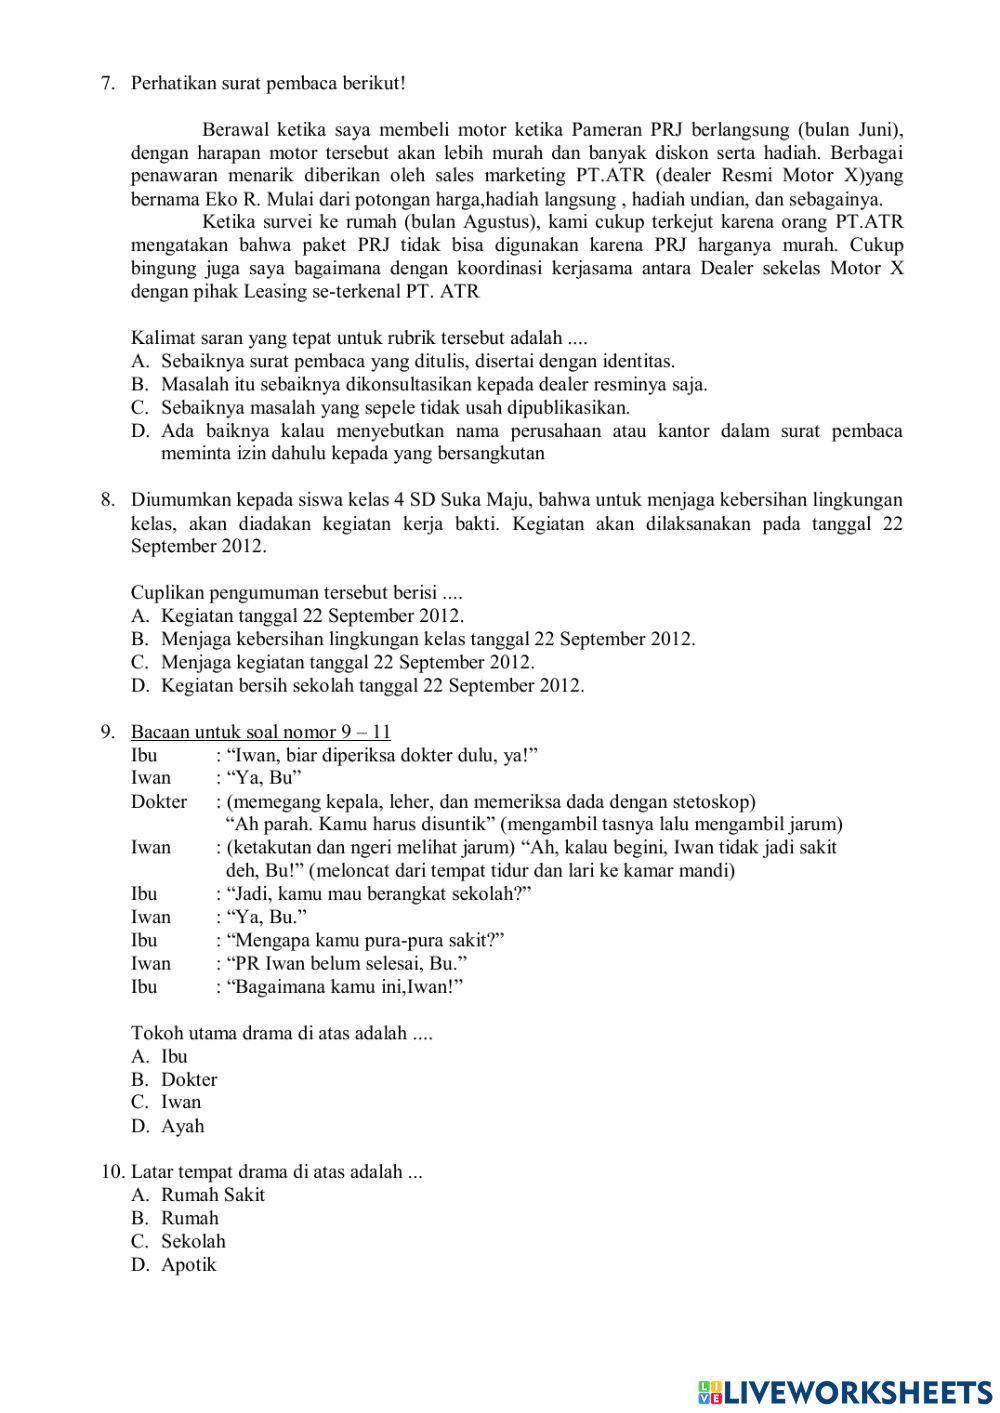 Latihan soal ujian sekolah bahasa indonesia